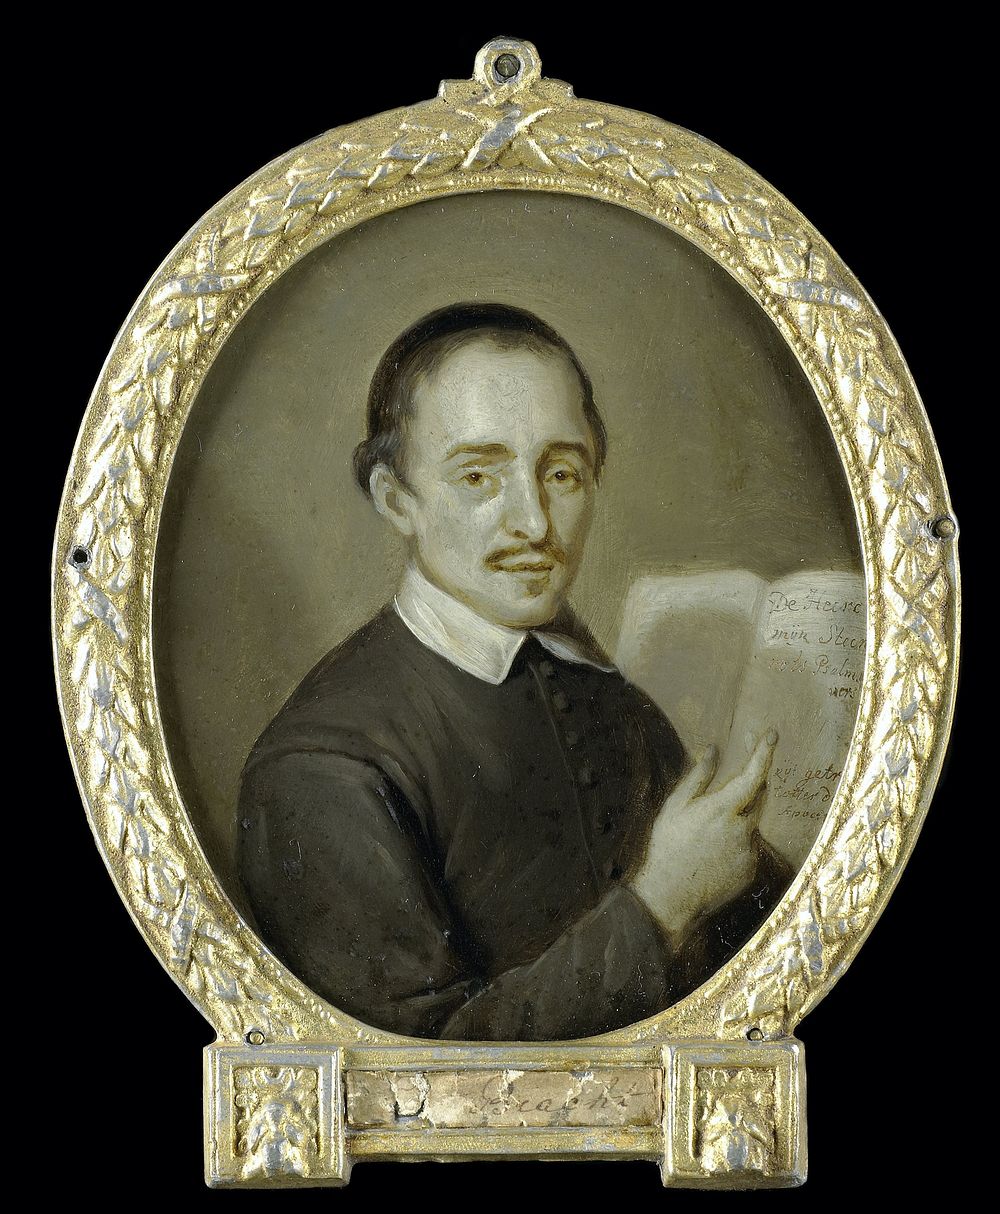 Portrait of Tieleman Jansz van Bracht, Clergyman and Poet in Dordrecht (1723 - 1771) by Jan Maurits Quinkhard and Abraham…